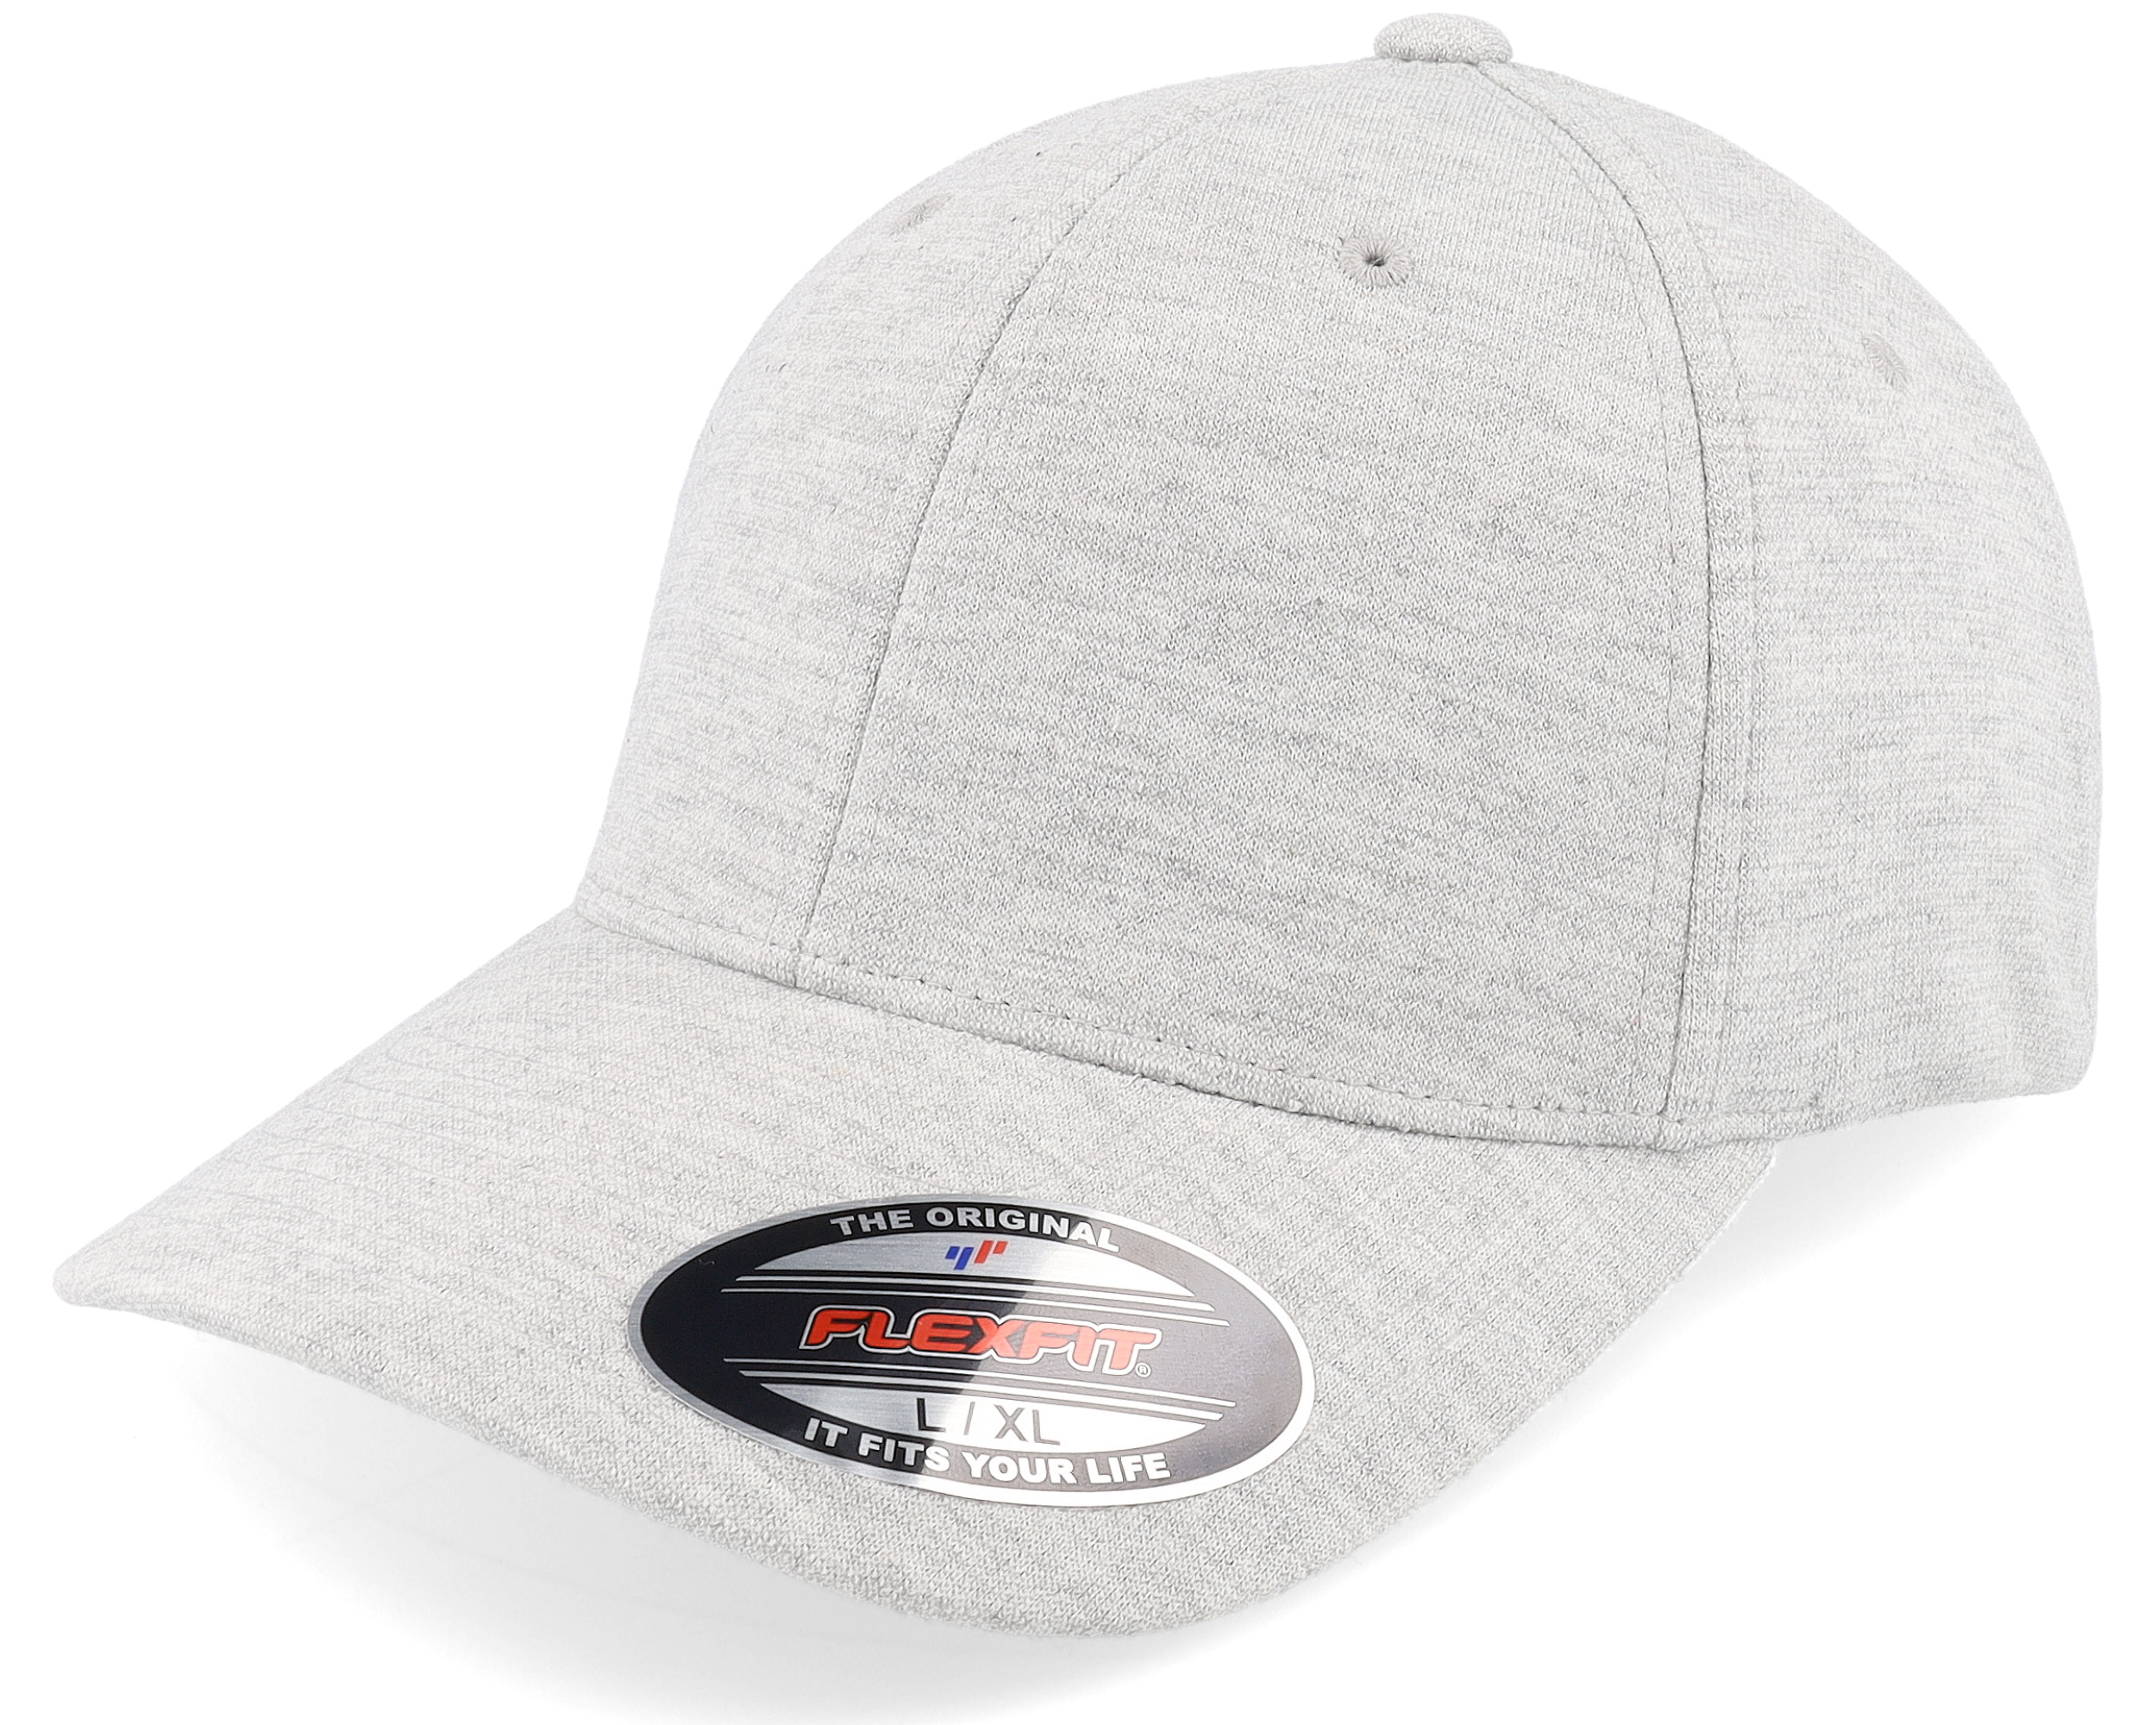 Grey cap - Heather Double Flexfit Jersey